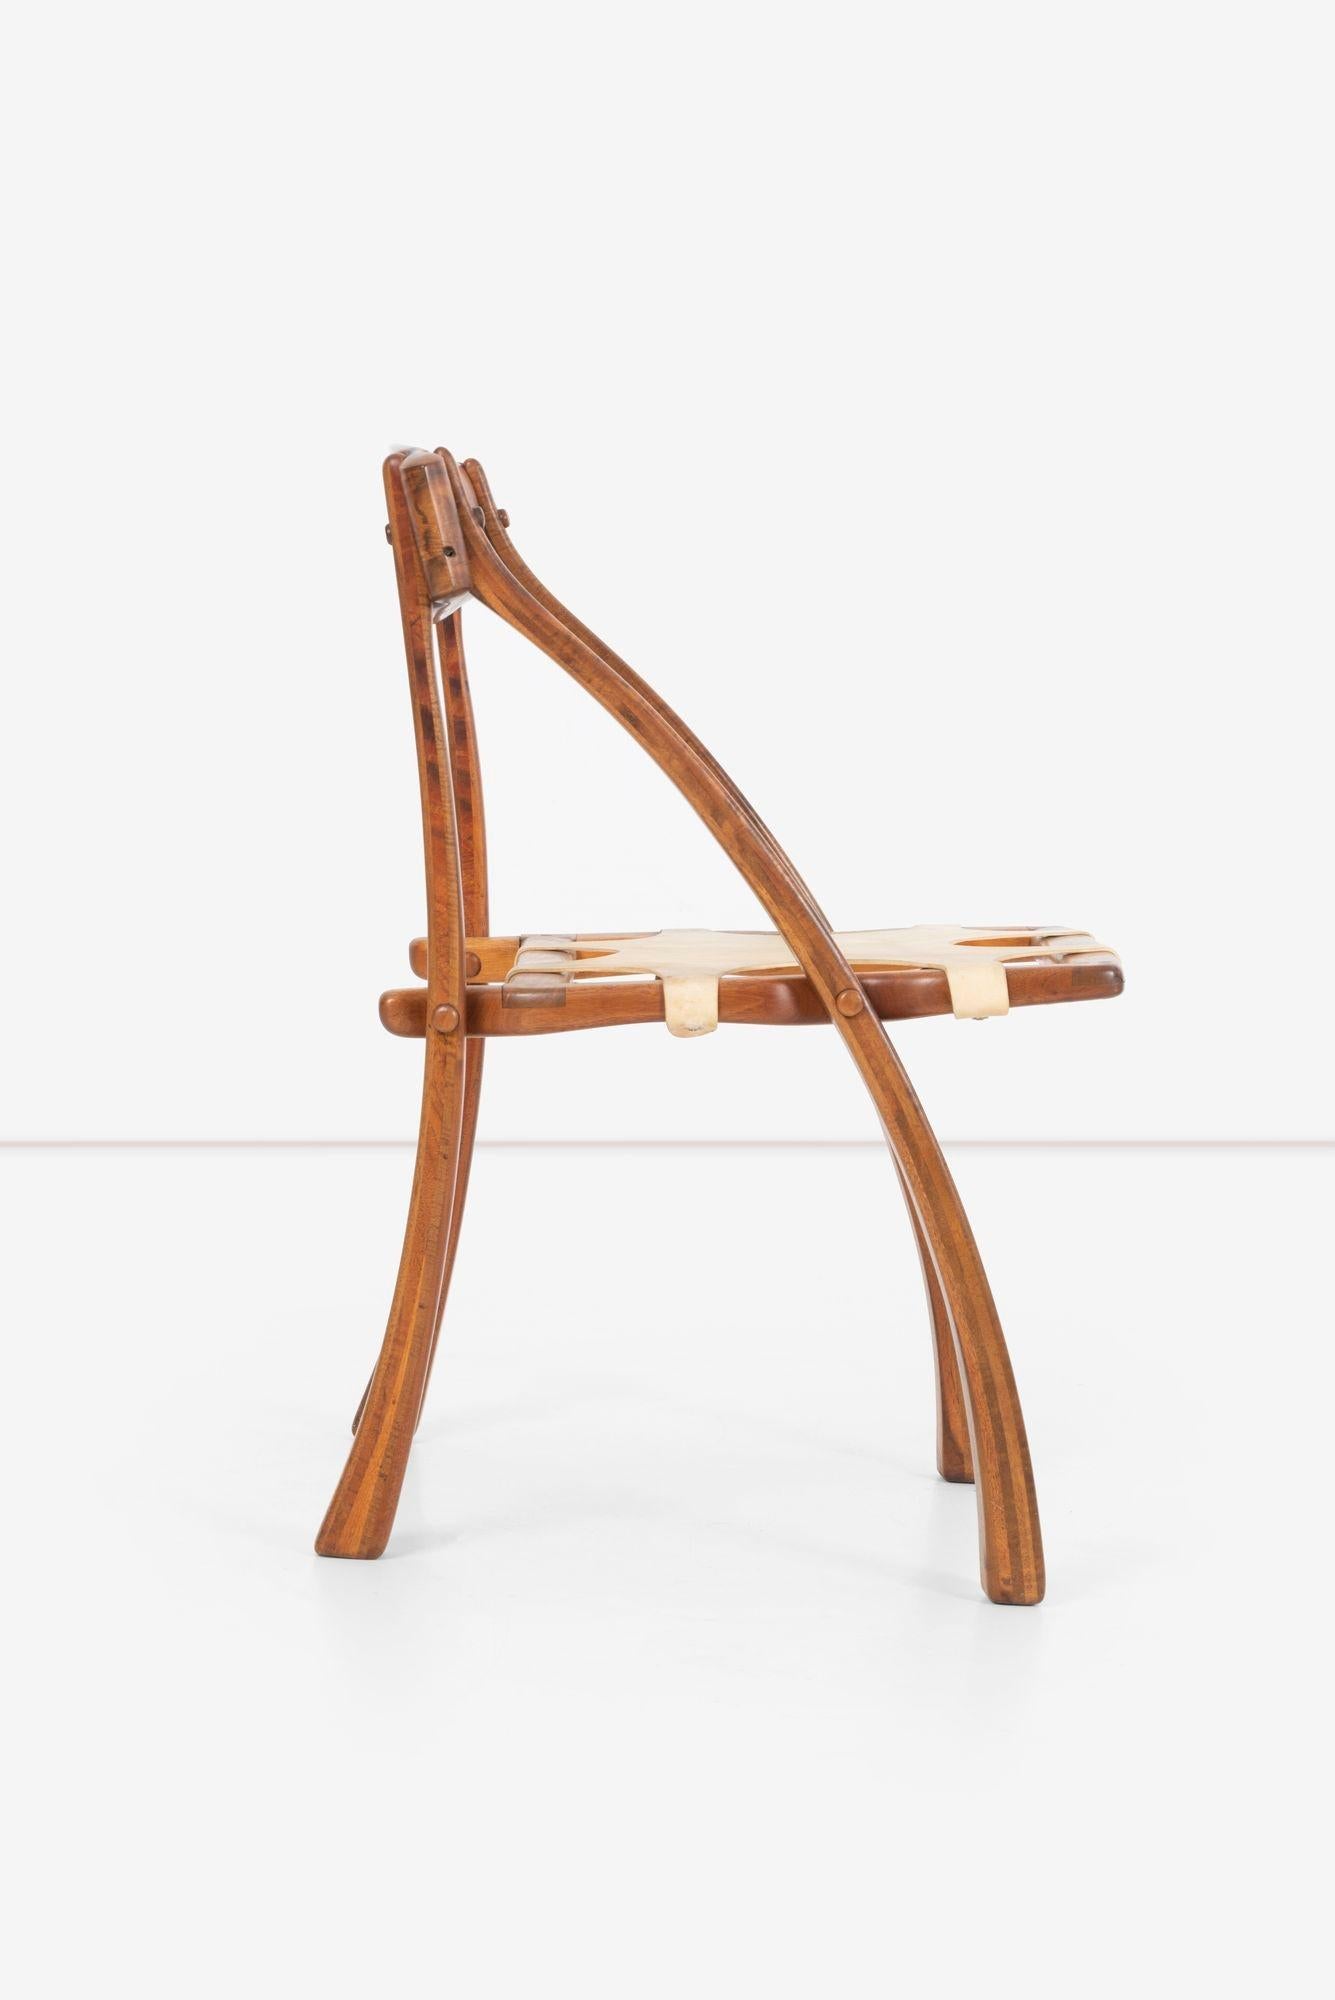 Organic Modern Arthur Espenet Carpenter Wishbone Chair For Sale